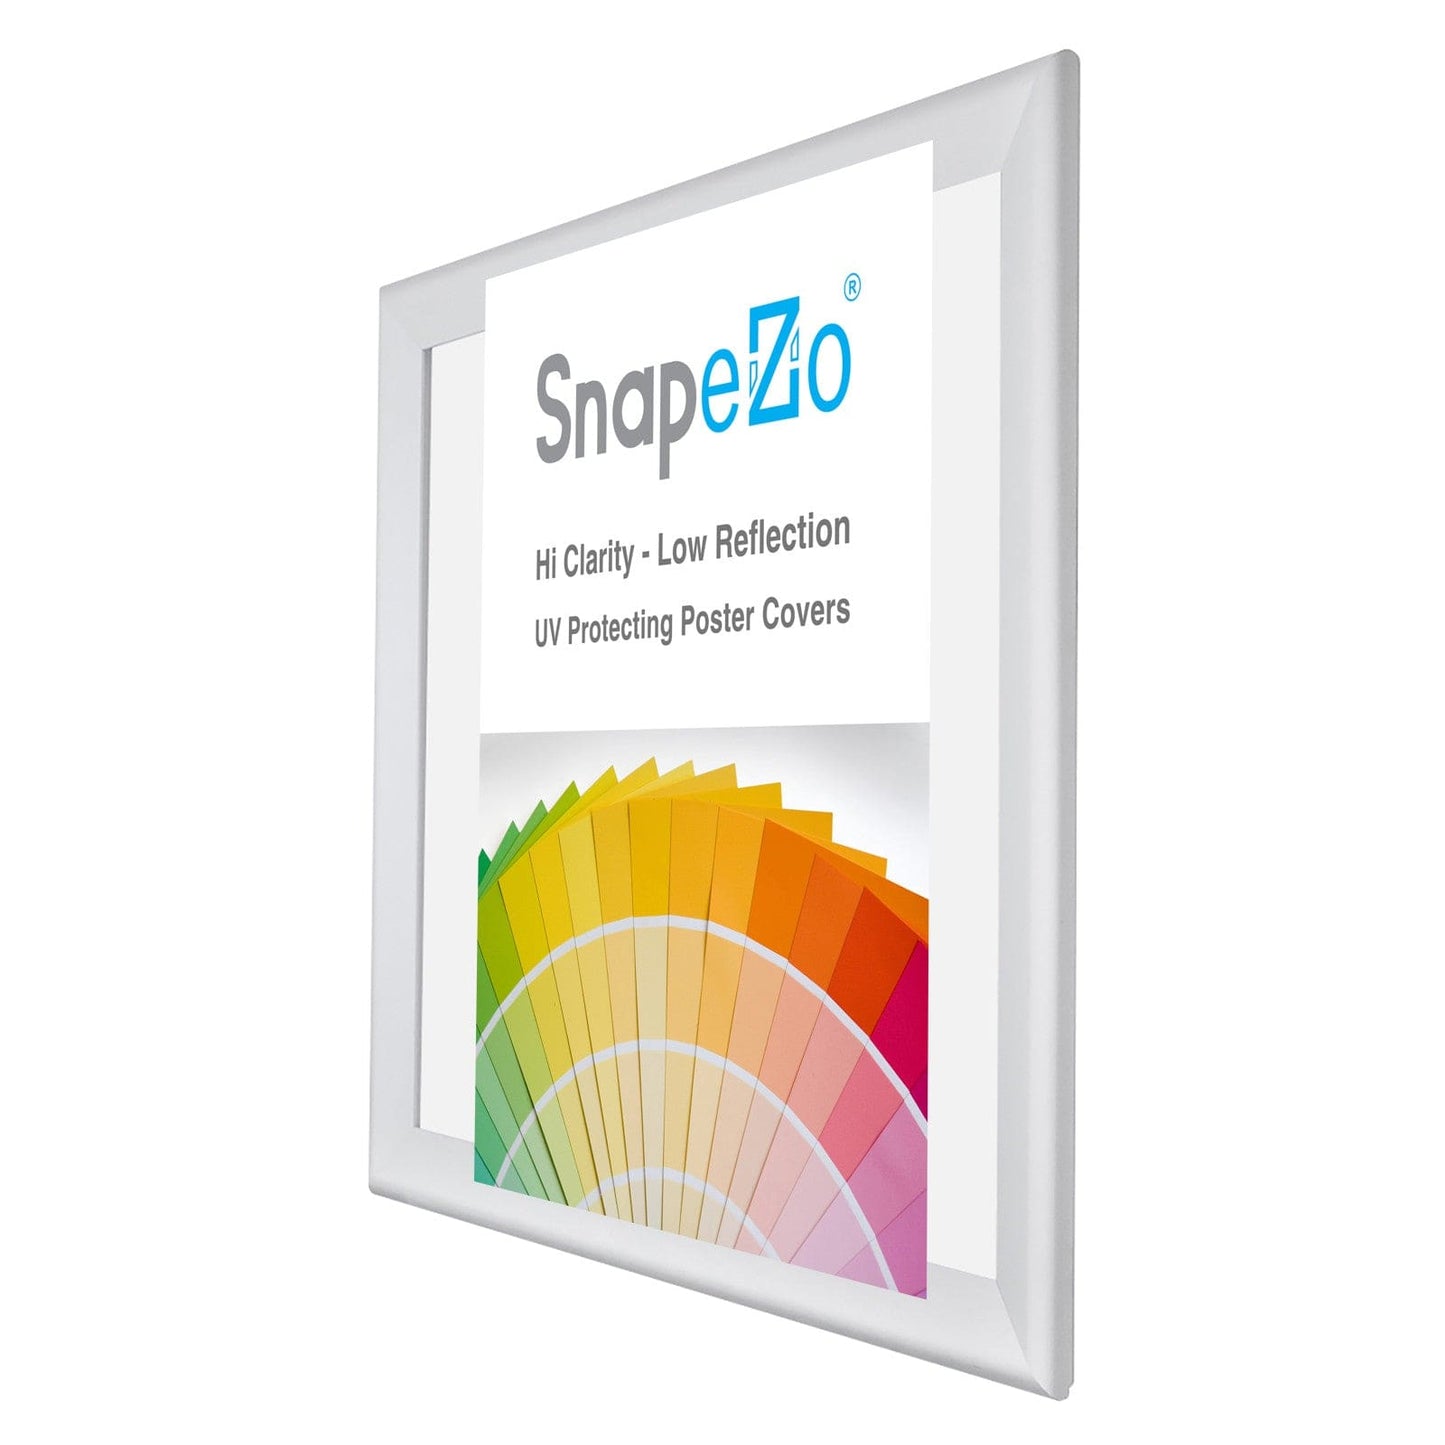 33x44 Silver SnapeZo® Snap Frame - 1.7" Profile - Snap Frames Direct